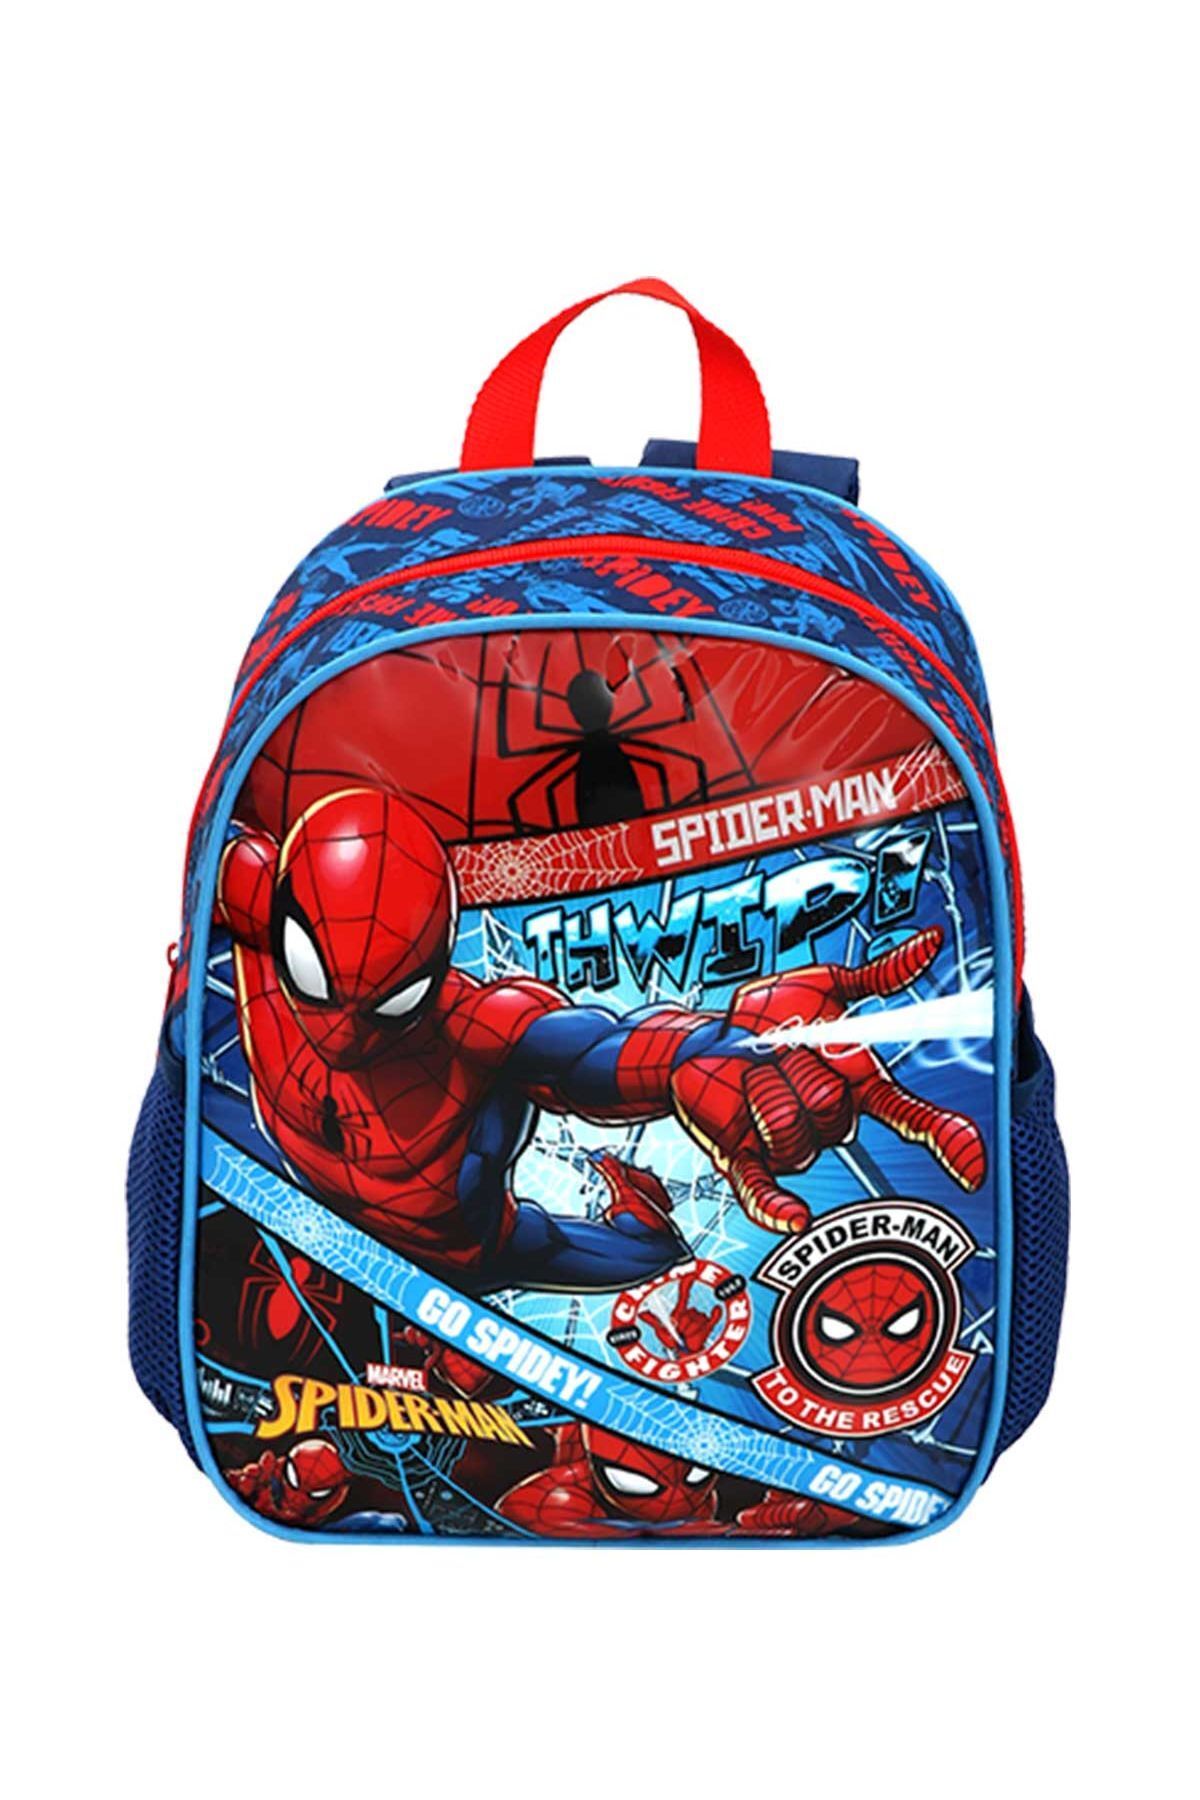 Spiderman Erkek Çocuk Spider-Man Spiderman Hawk Jr Go Spidey Anaokulu Çantası OTTO-48115